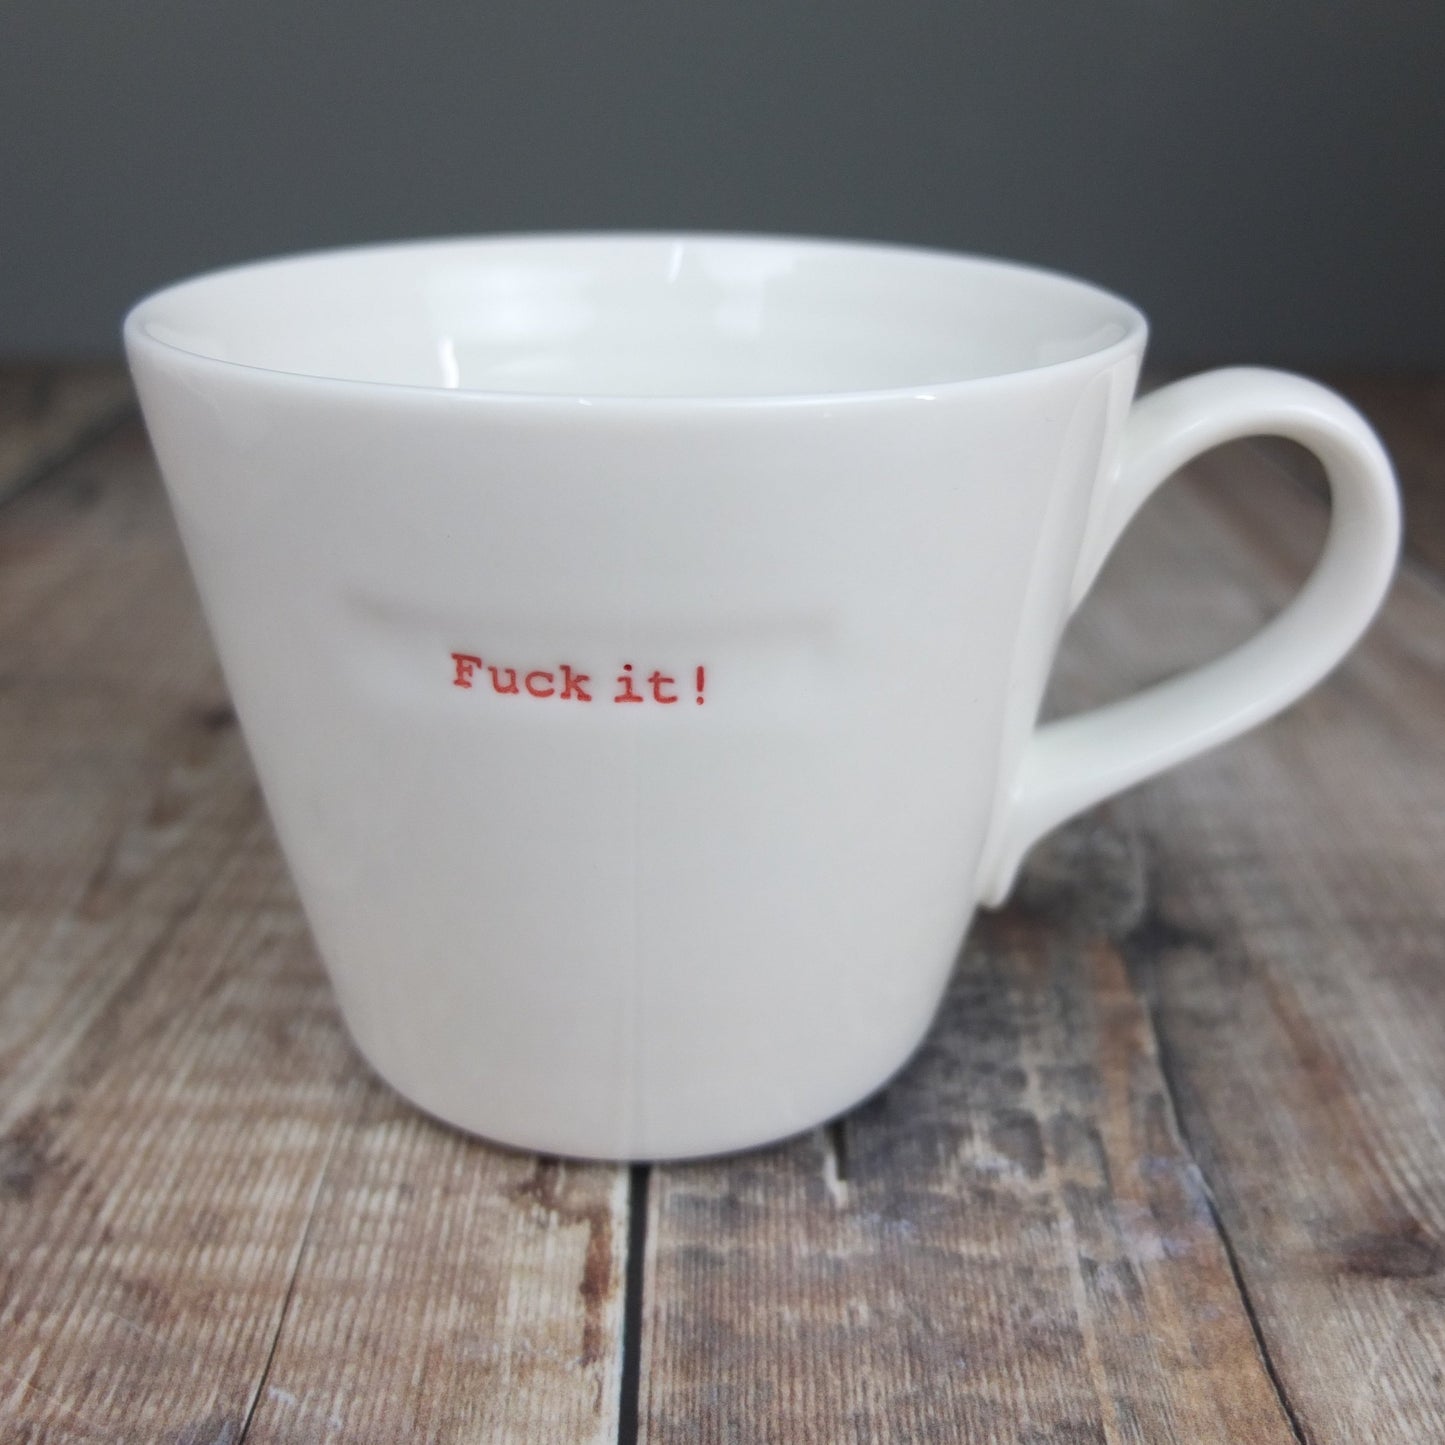 Fuck it! mug by Keith Brymer Jones